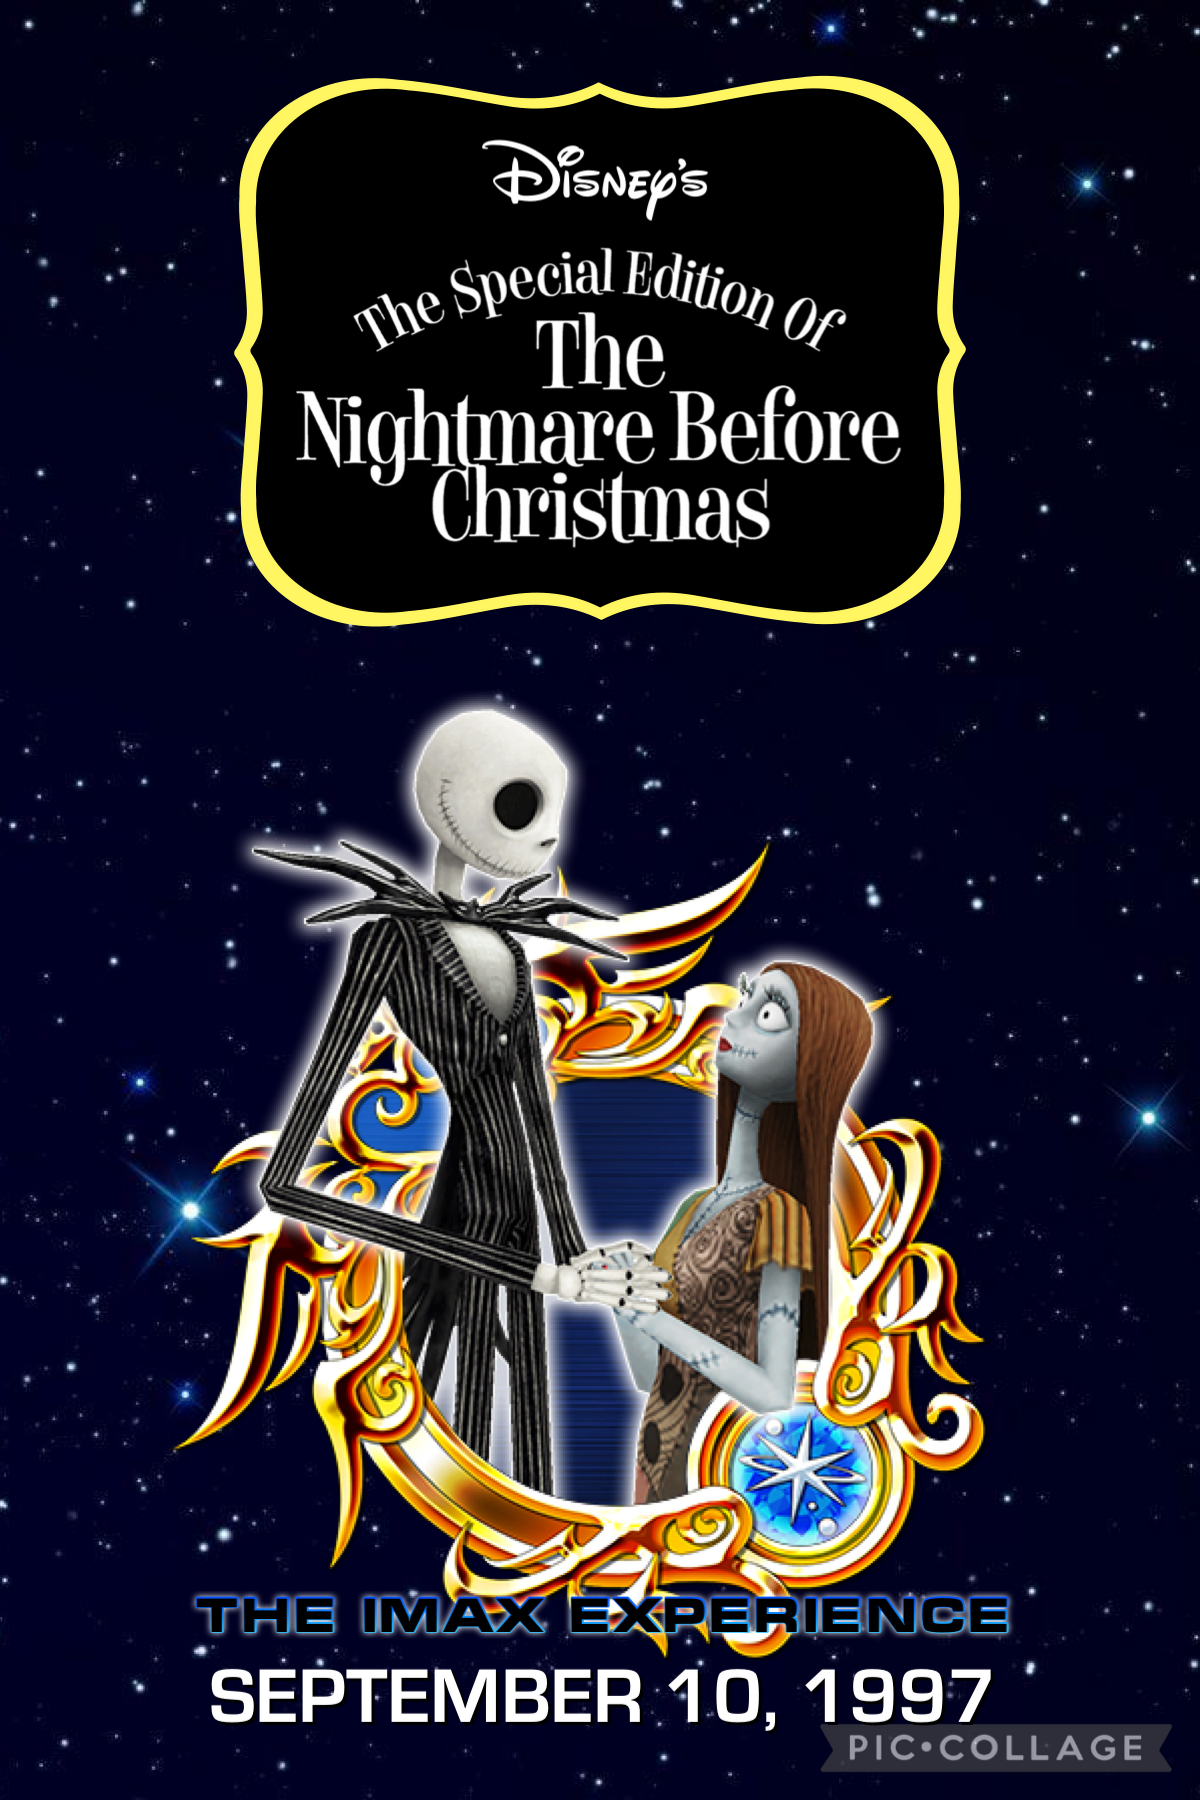 Checkers Nightmare Before Christmas Disney Tim Burton